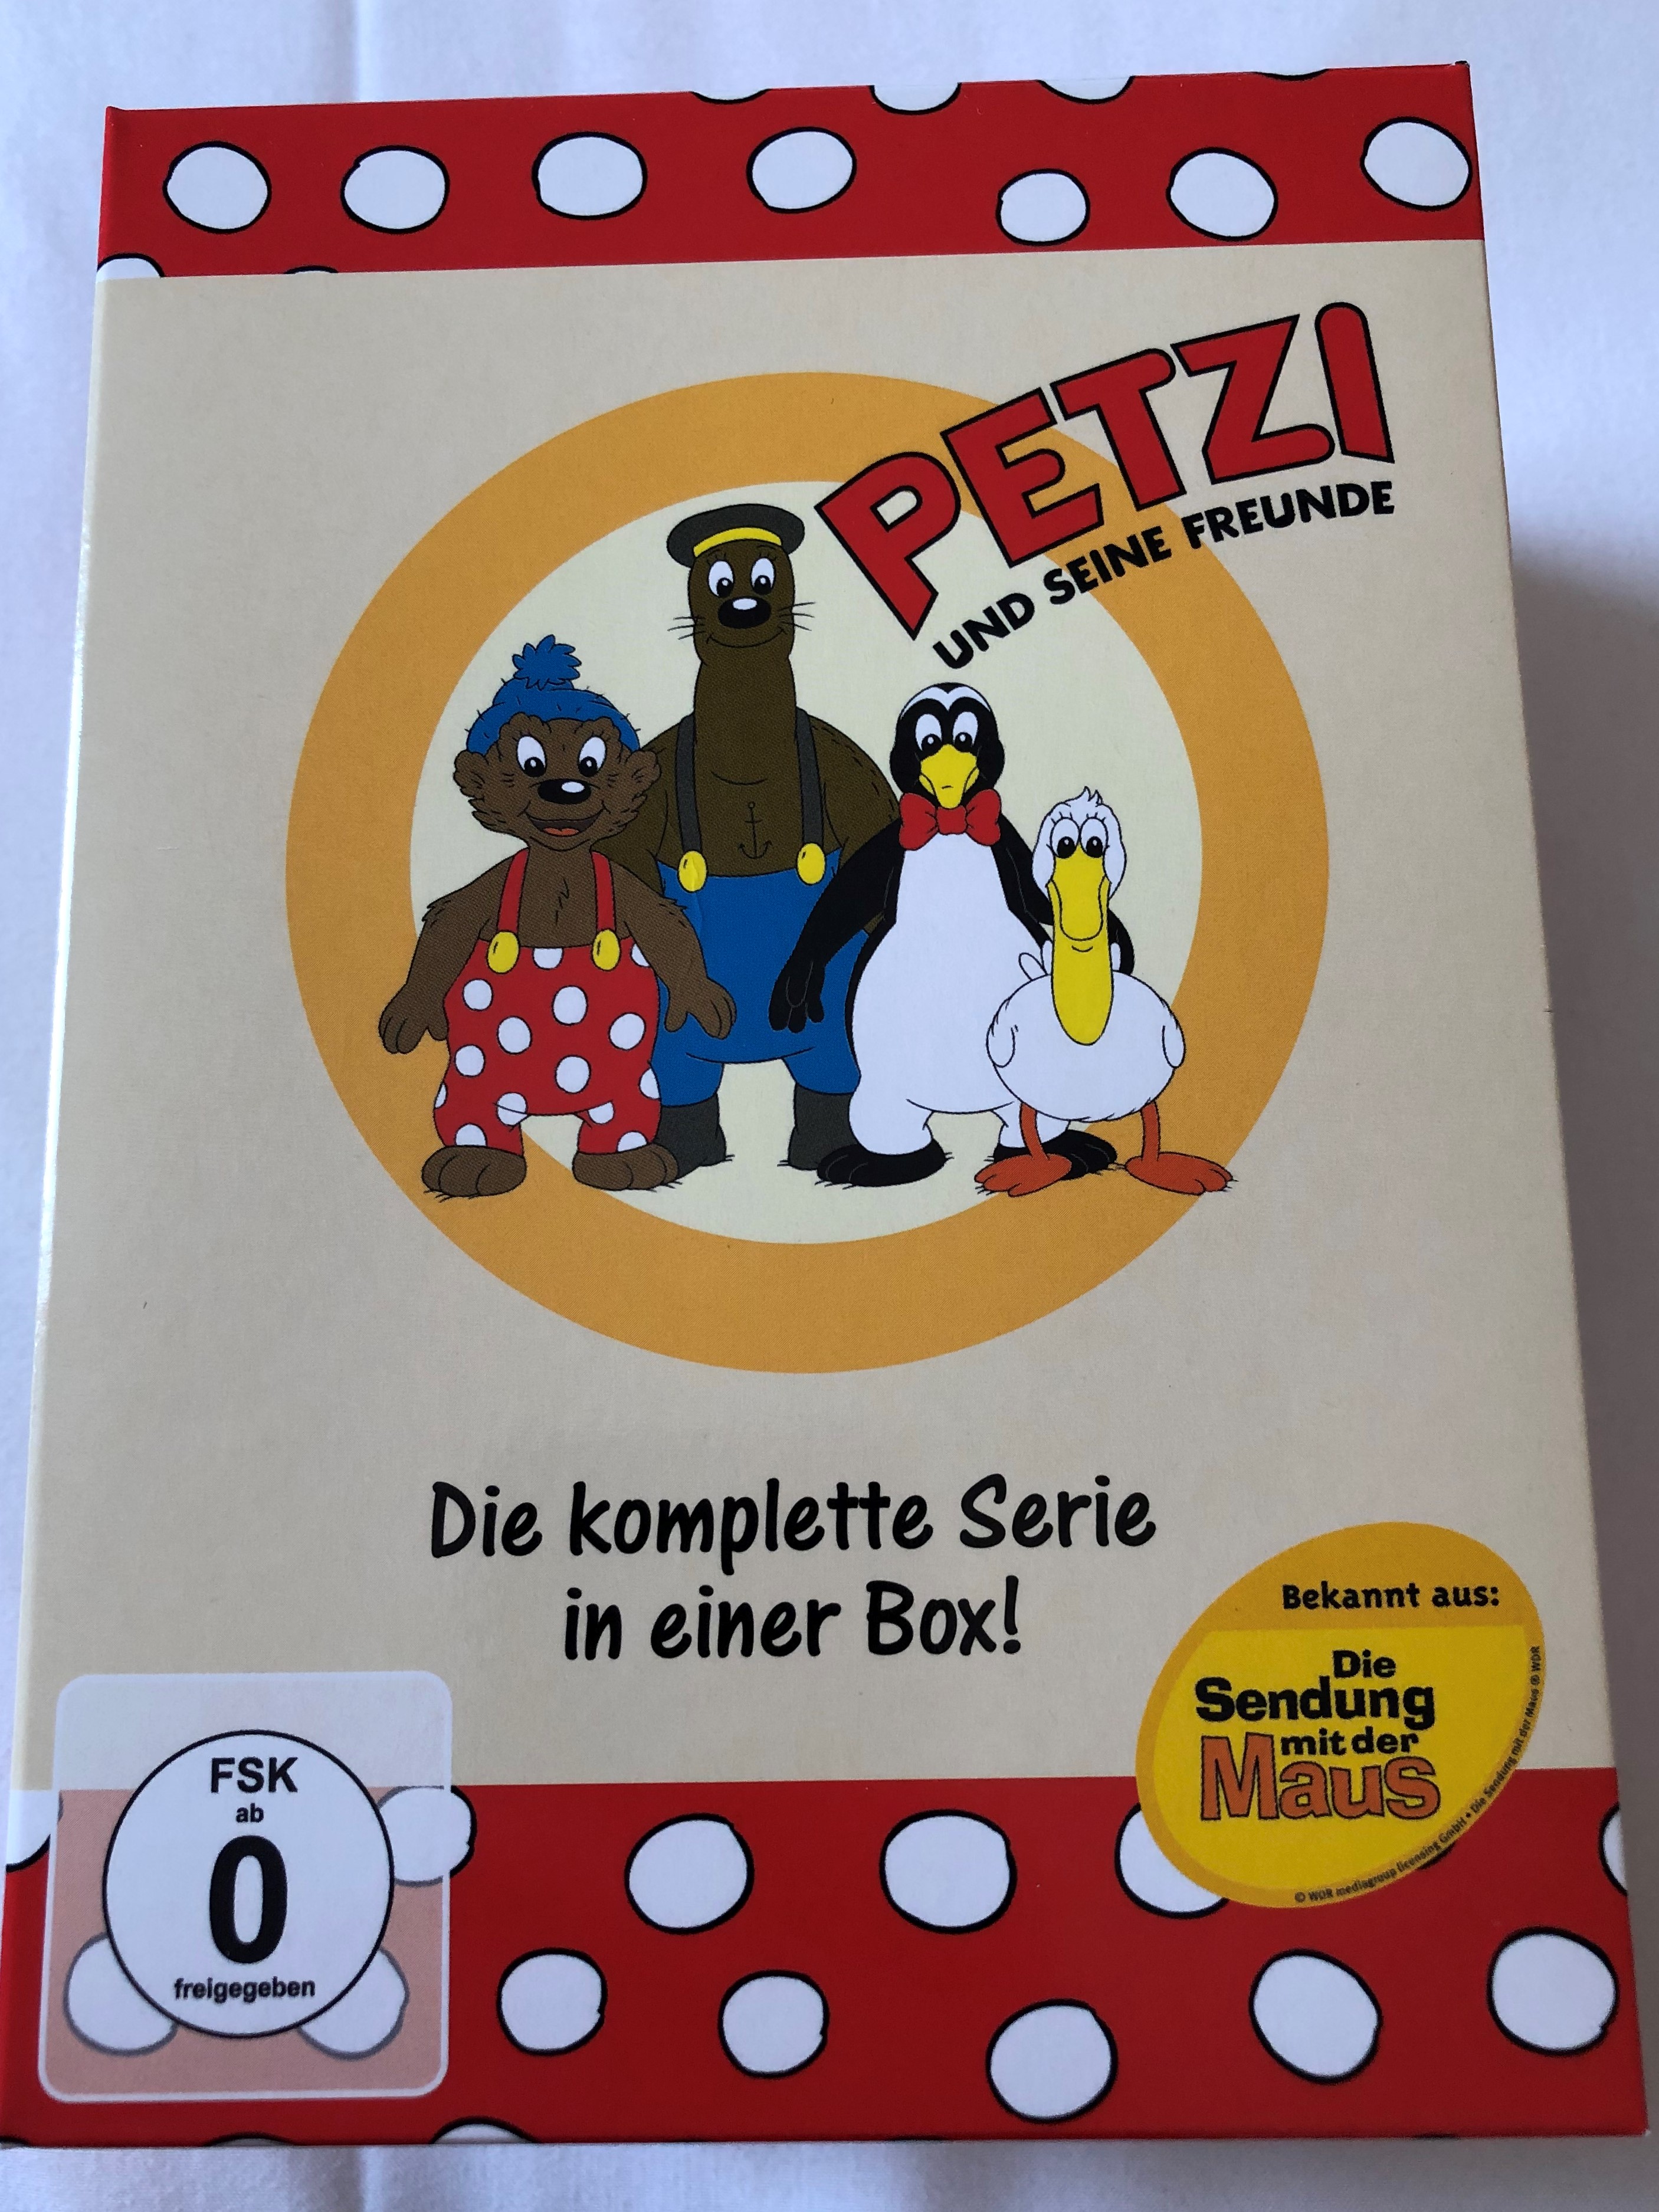 petzi-und-seine-freunde-dvd-set-2004-petzi-and-his-friends-6-discs-52-episodes-classic-german-cartoon-1-.jpg